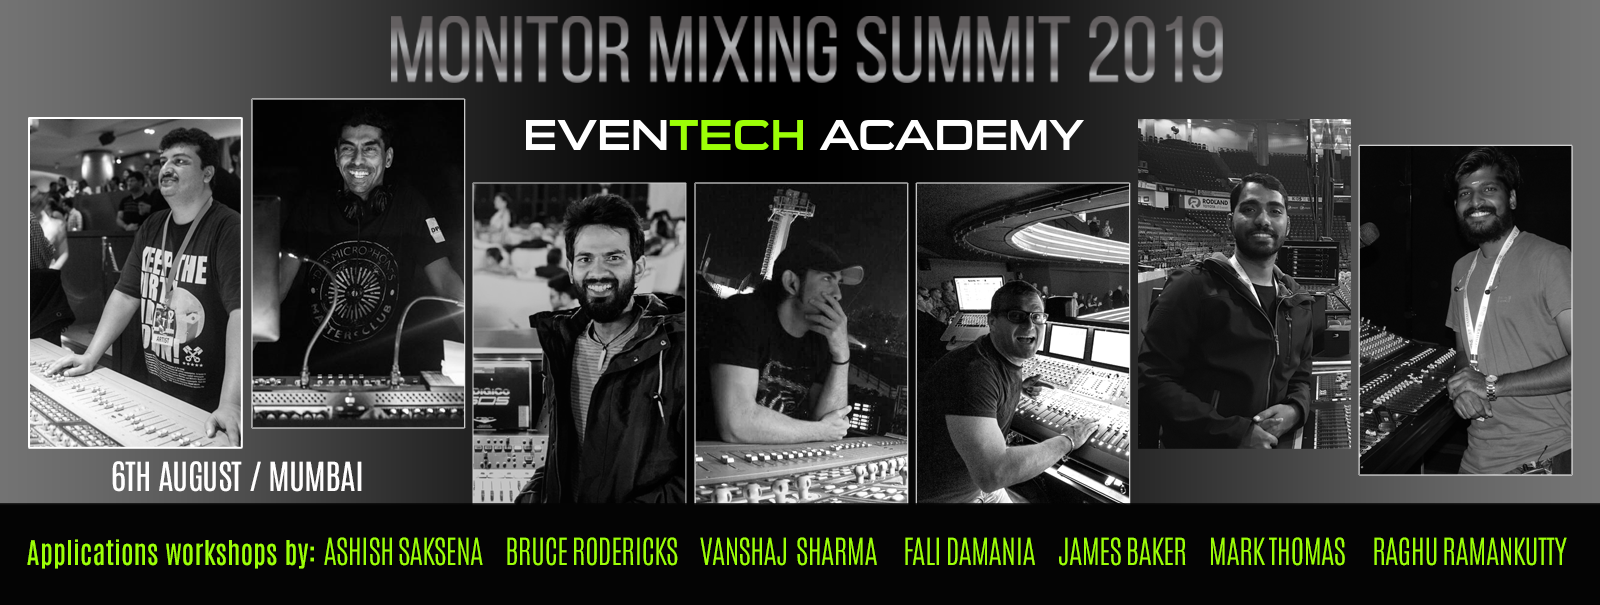 monitor mixing summit 2019